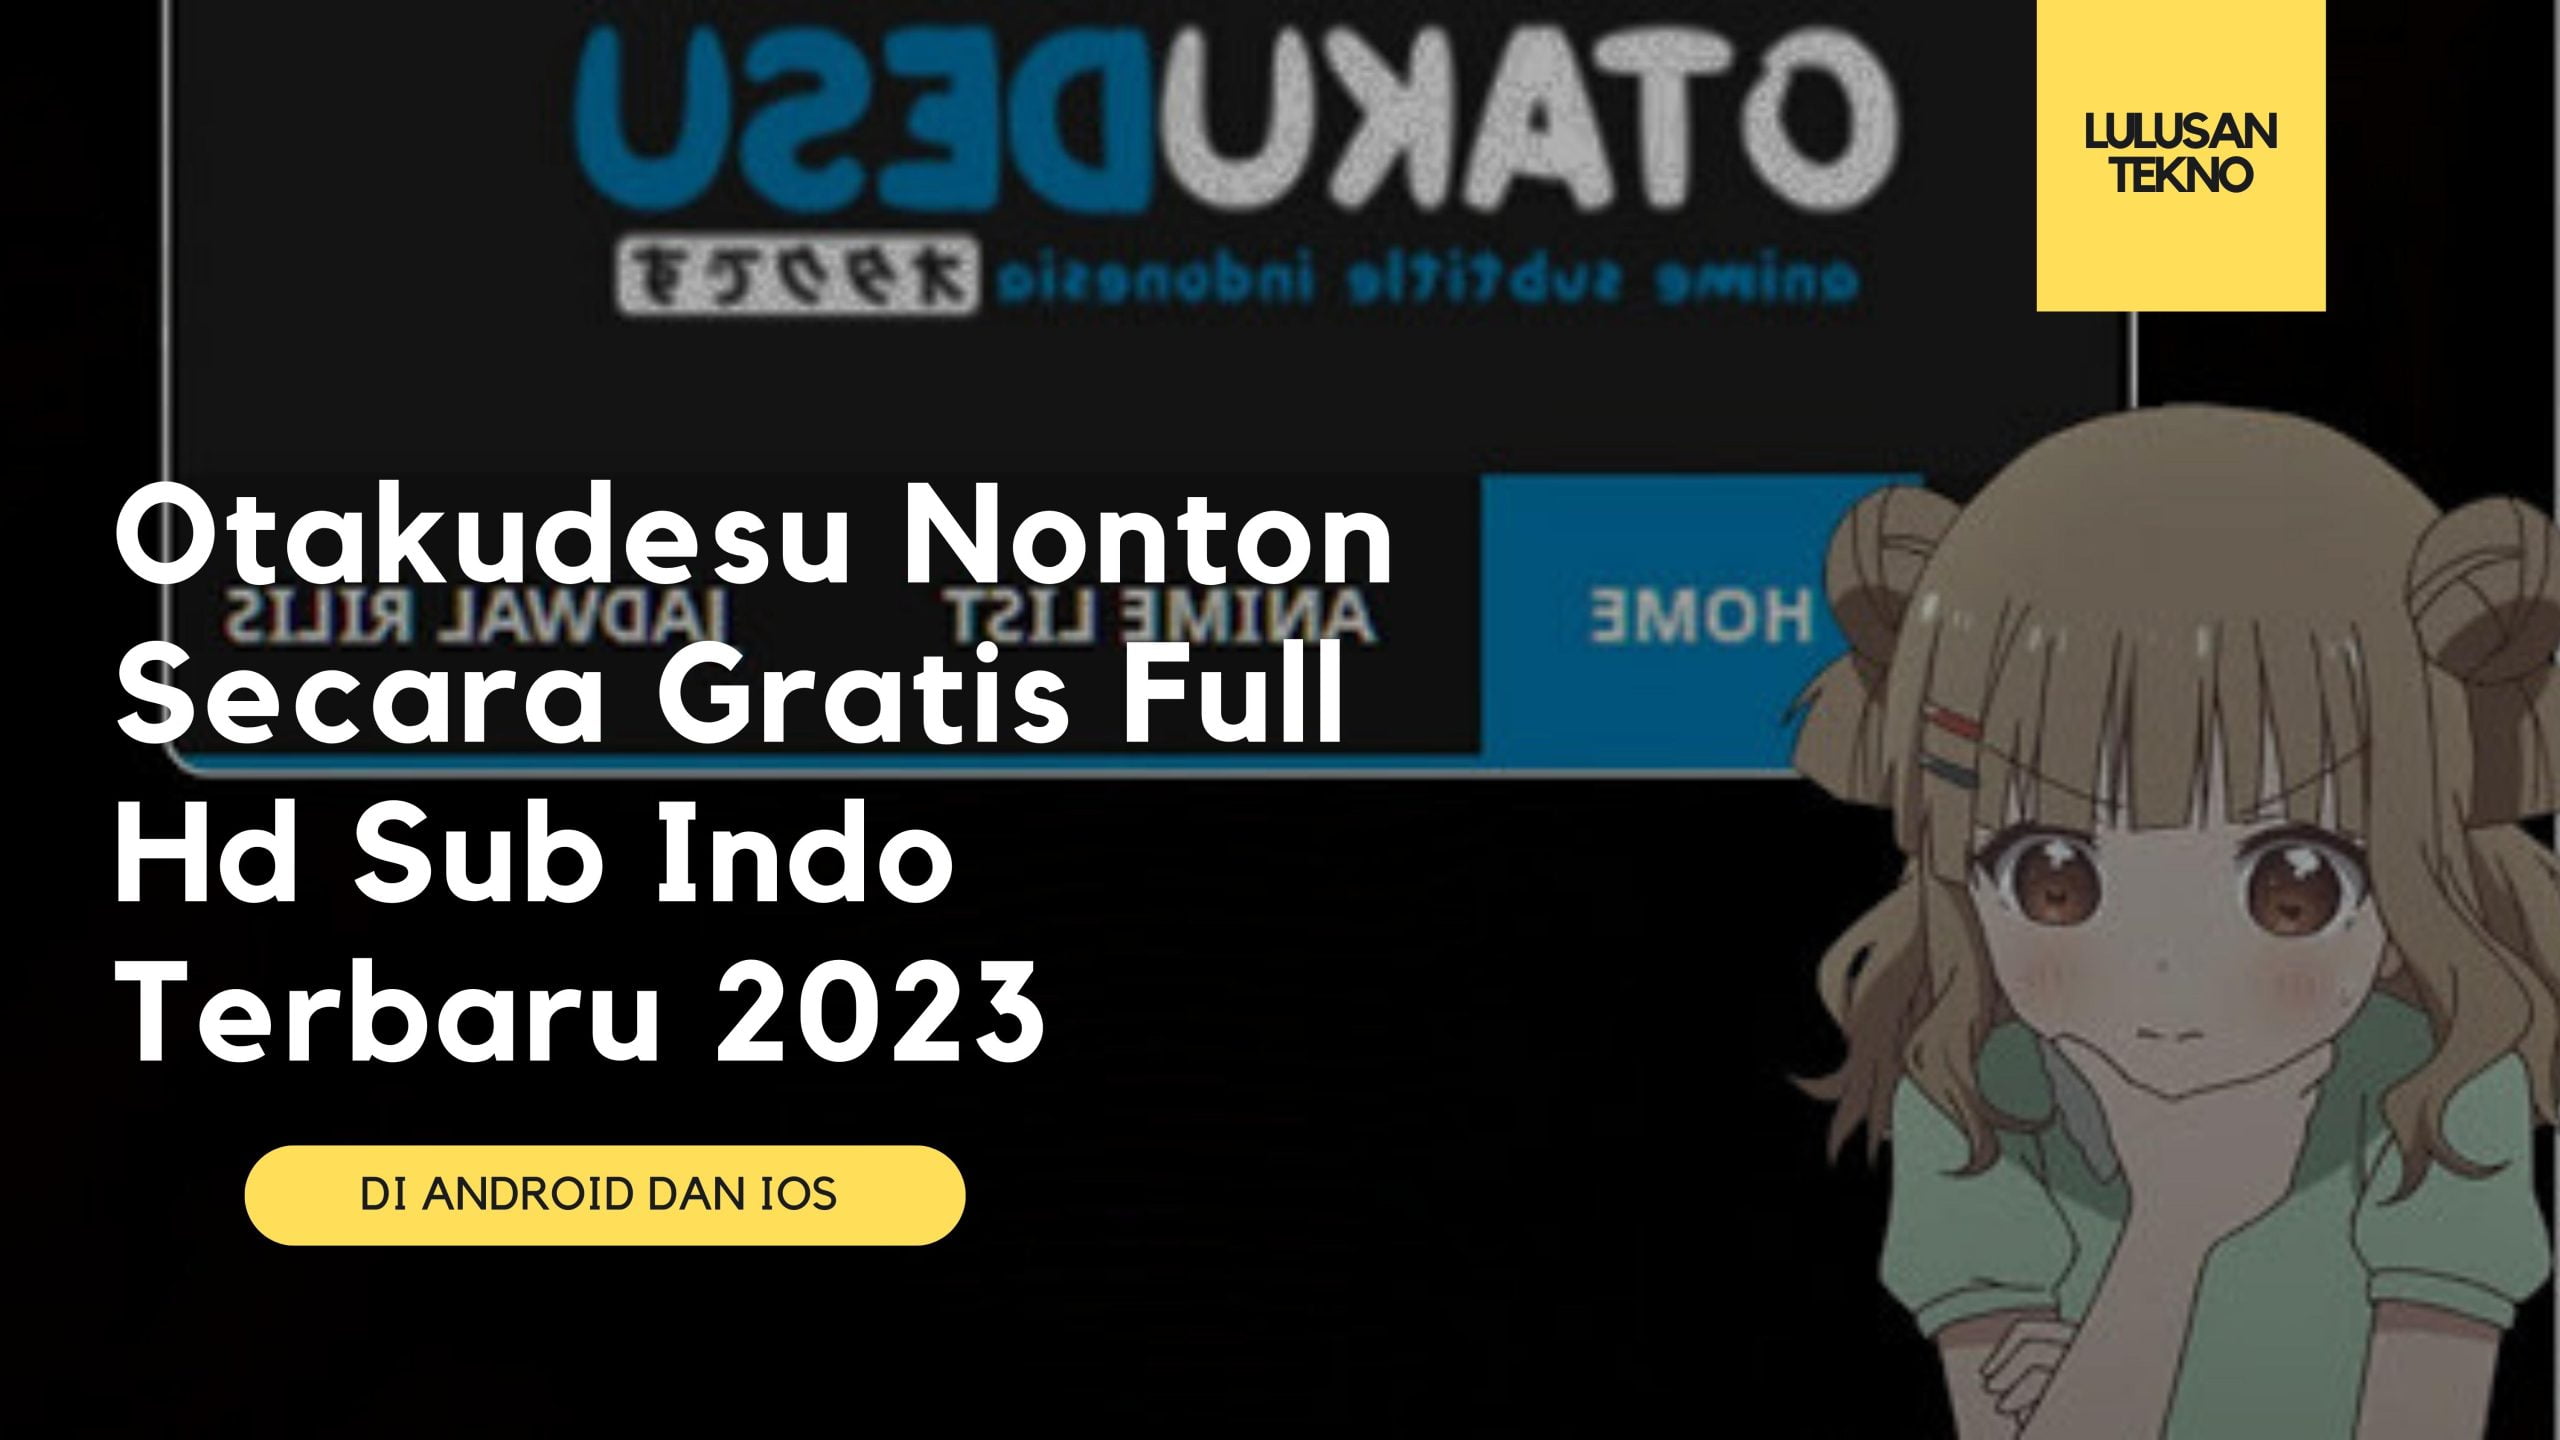 Otakudesu Nonton Secara Gratis Full Hd Sub Indo Terbaru 2023